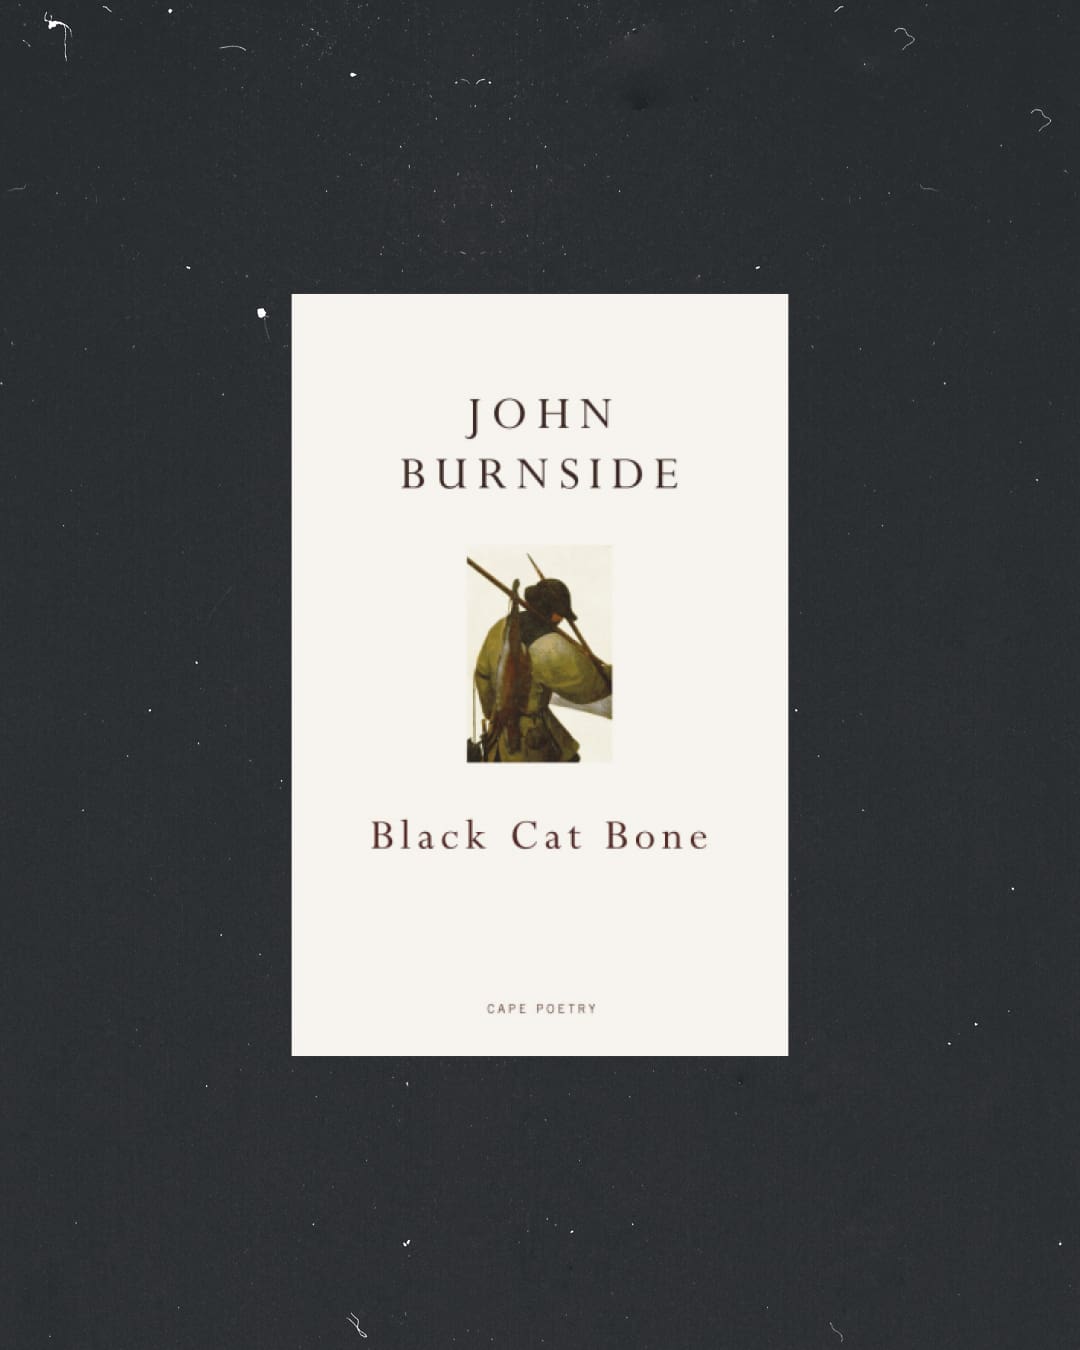 Black Cat Bone by John Burnside book cover